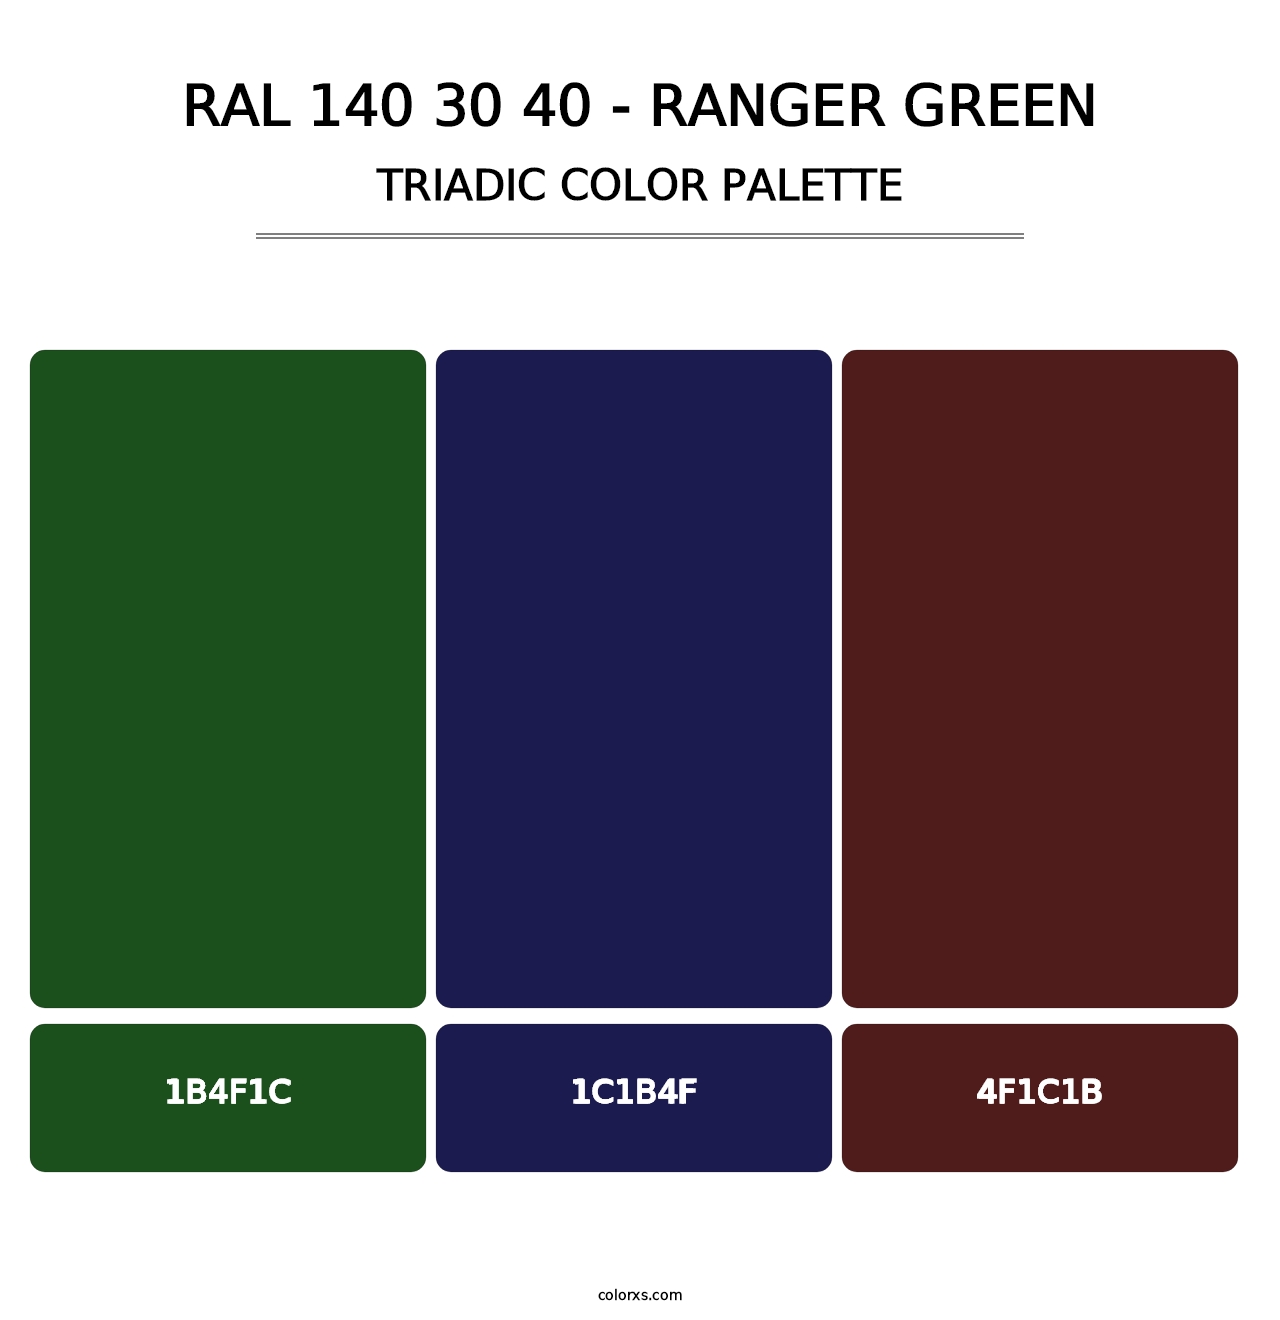 RAL 140 30 40 - Ranger Green - Triadic Color Palette